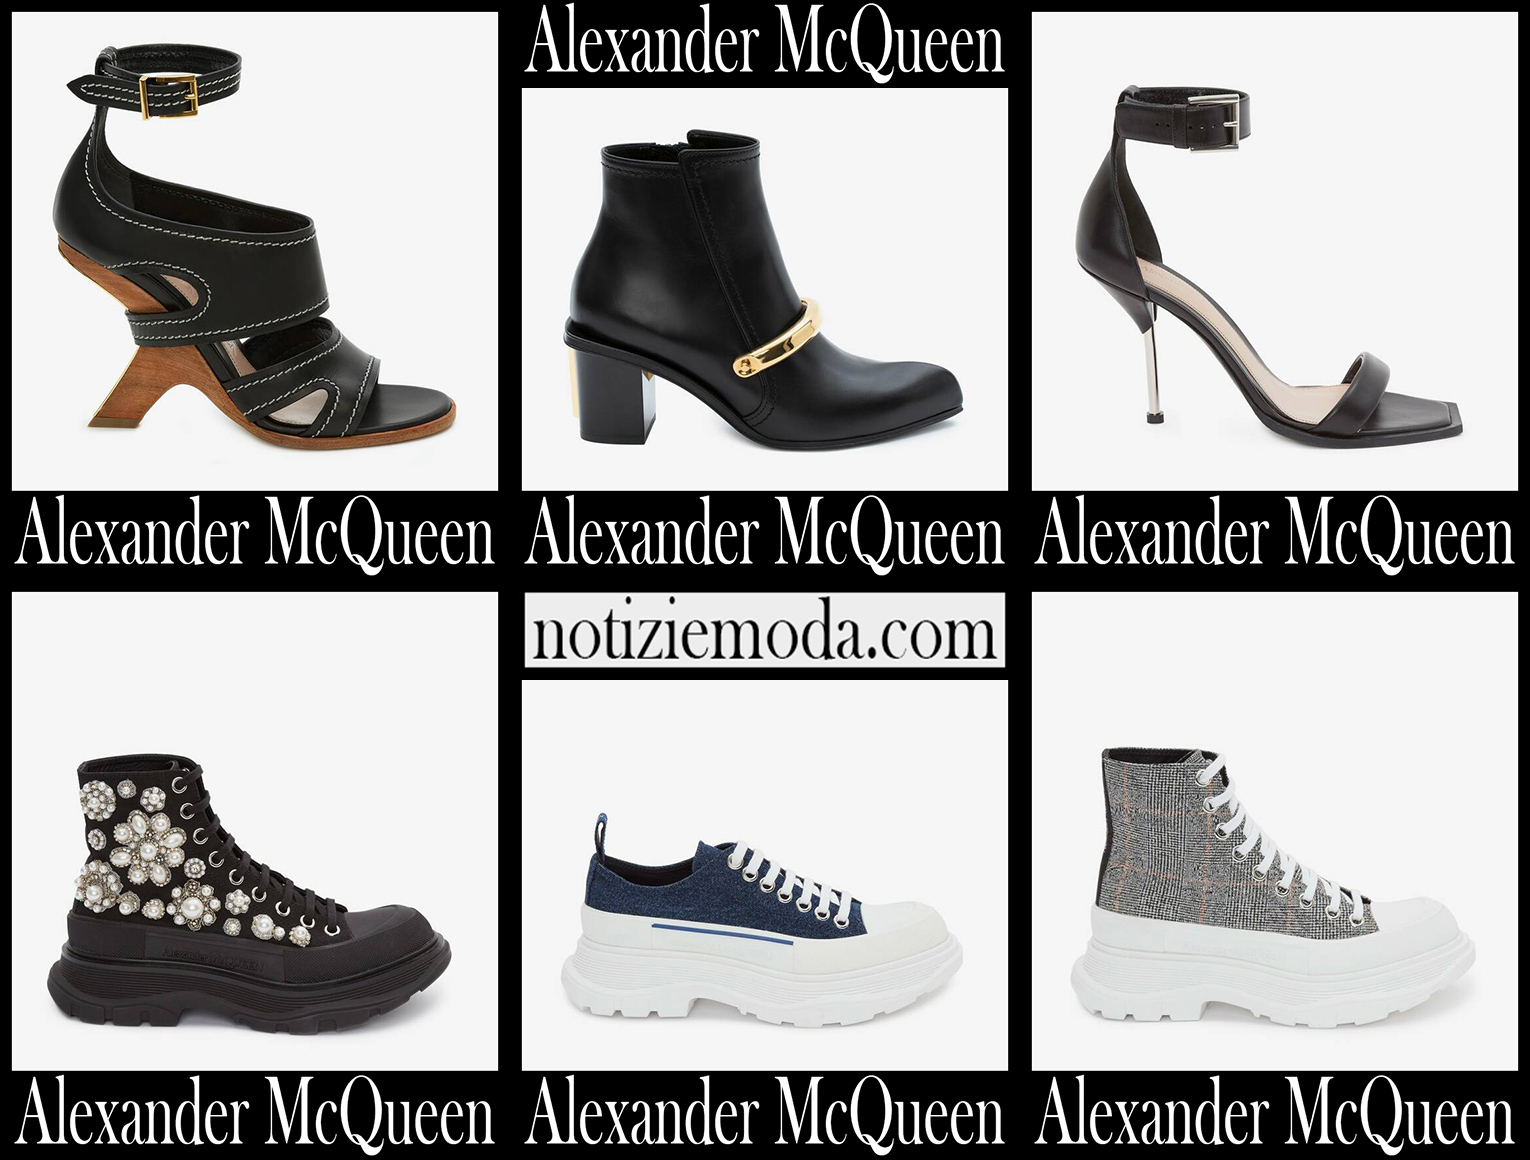 Nuovi arrivi scarpe Alexander McQueen 2021 calzature donna